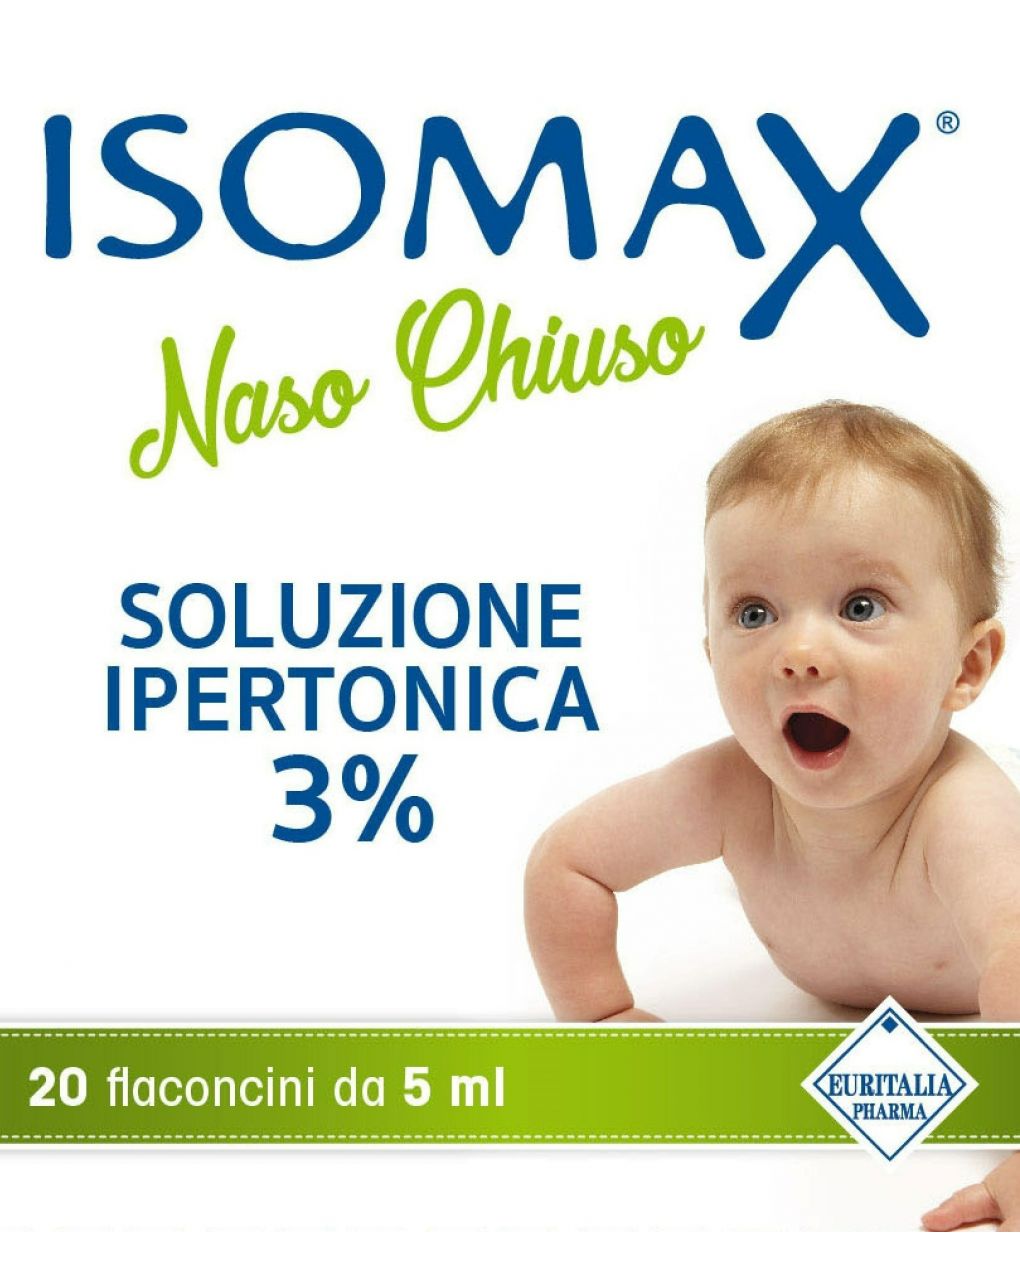 Isomax flaconcini ipertonici 20 fl x 0.5ml